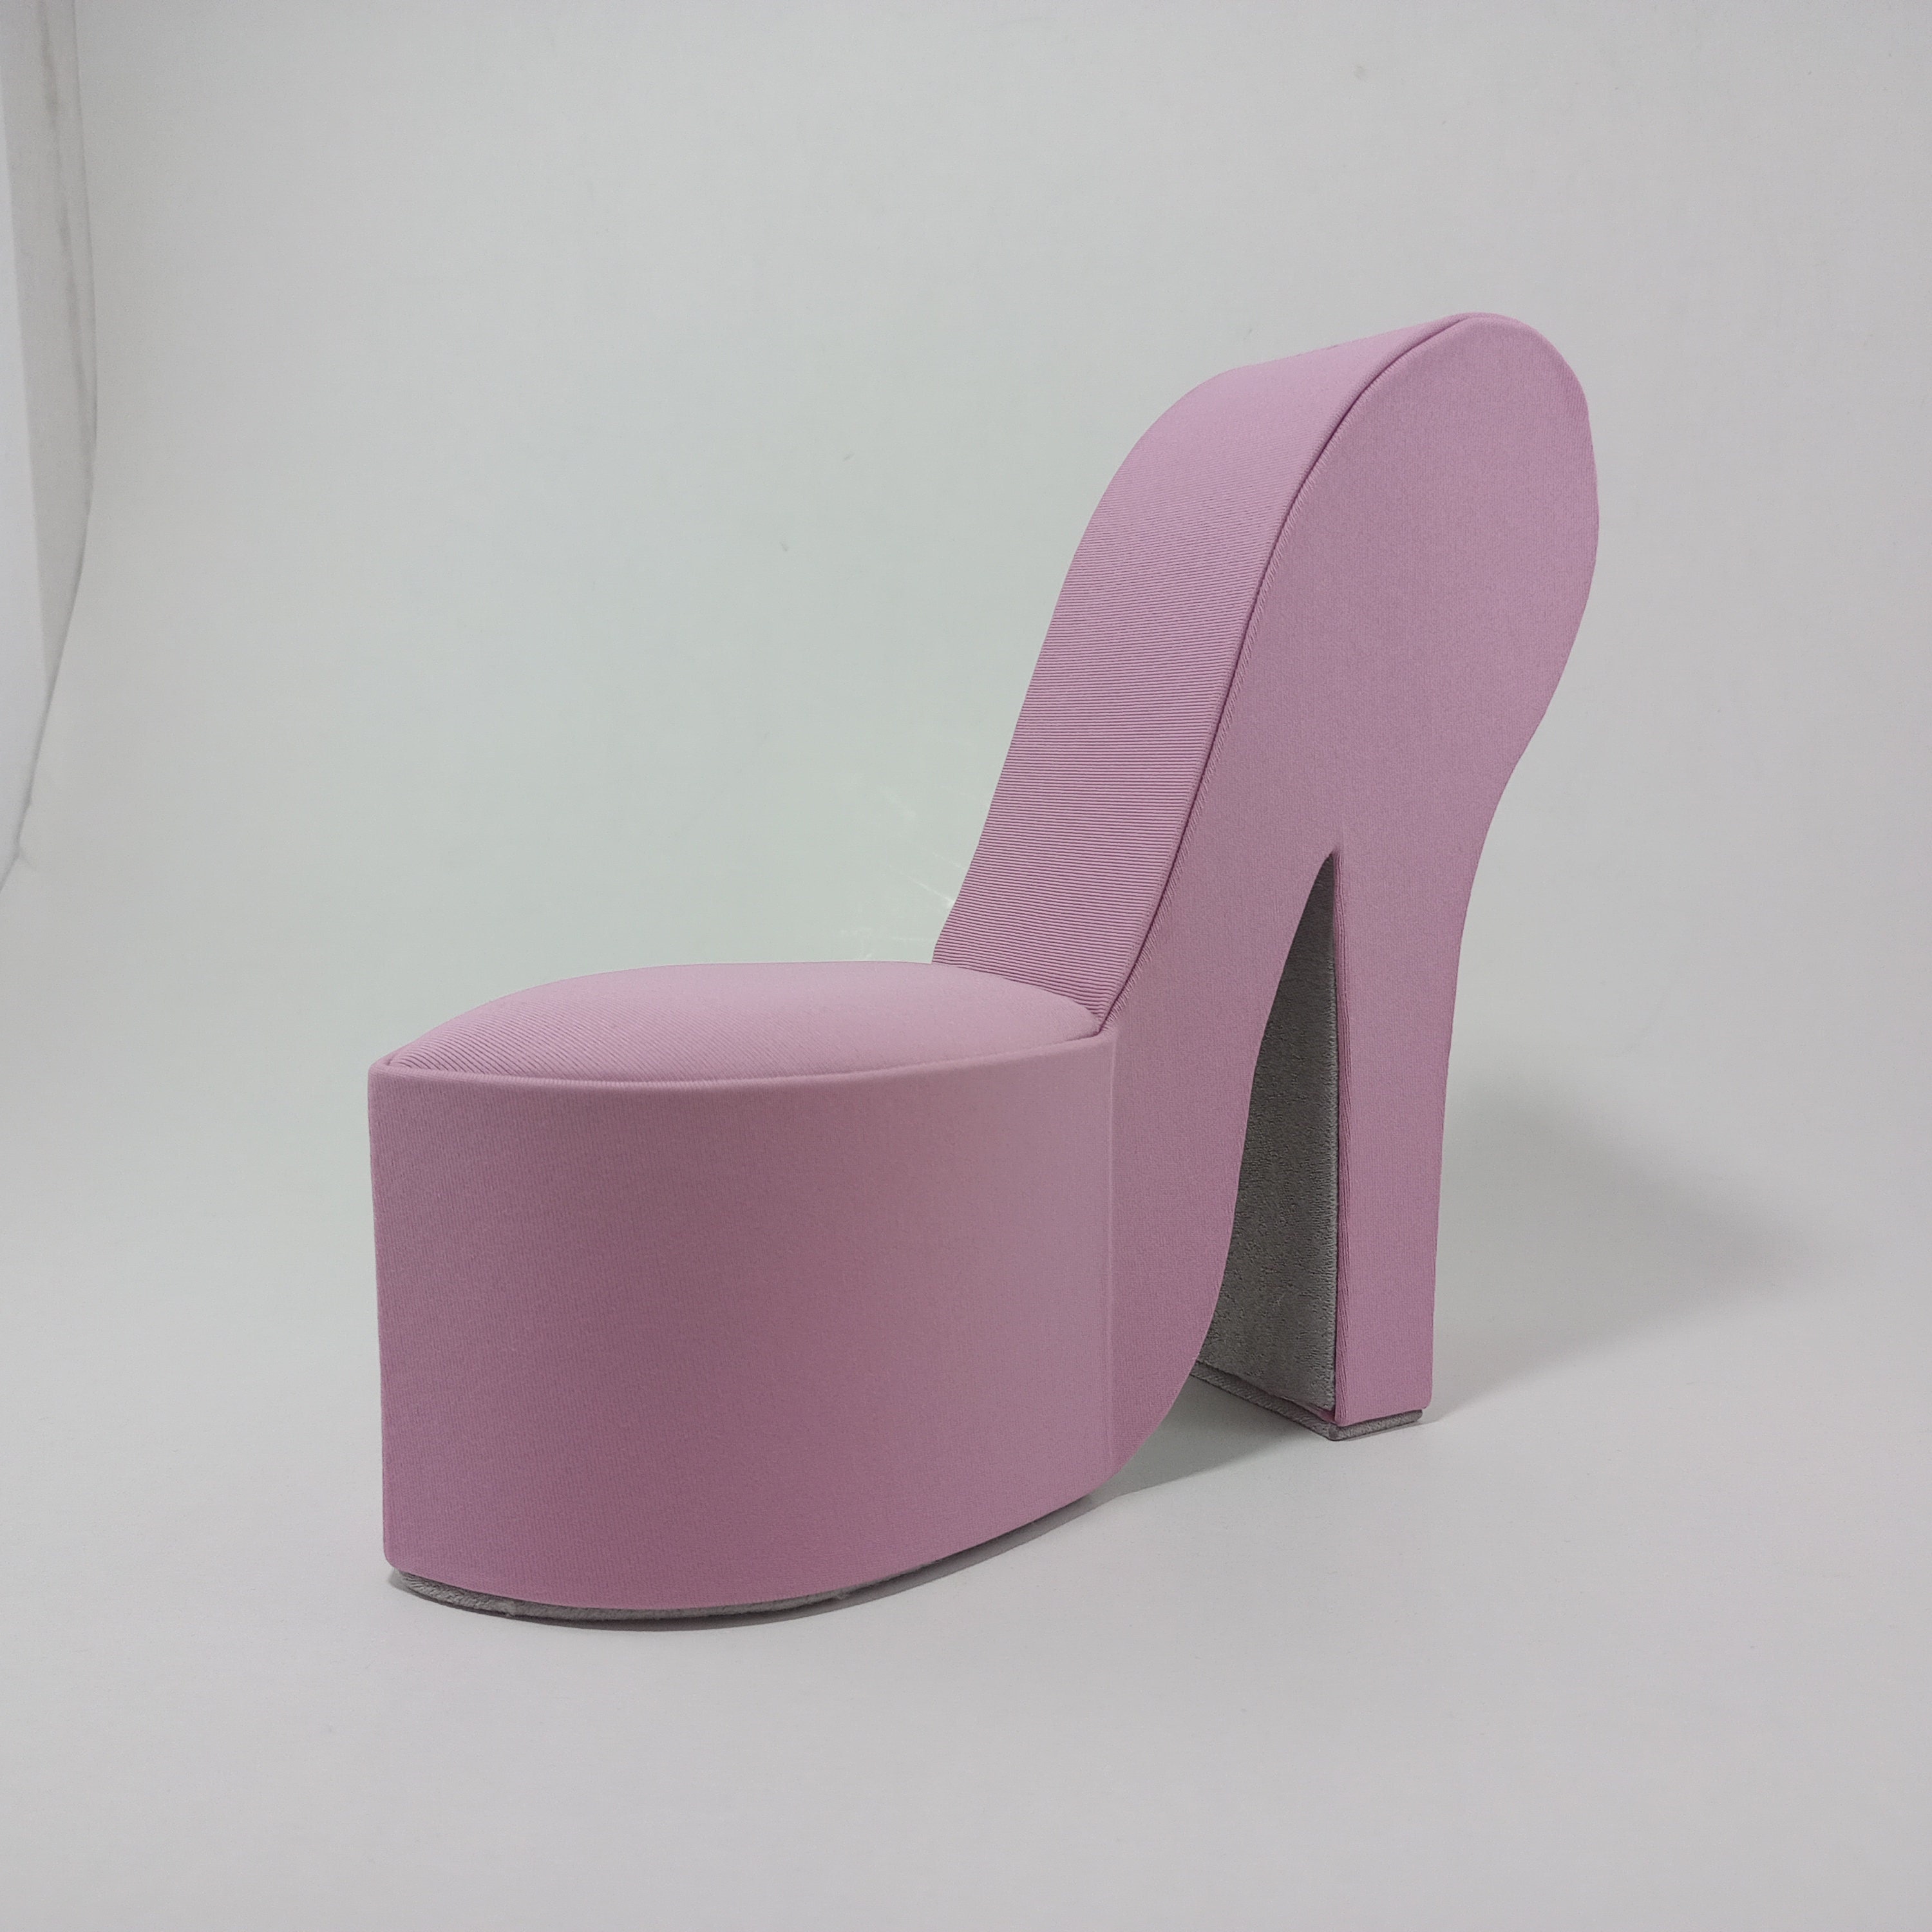 High Heel Shoe Chair | Wayfair